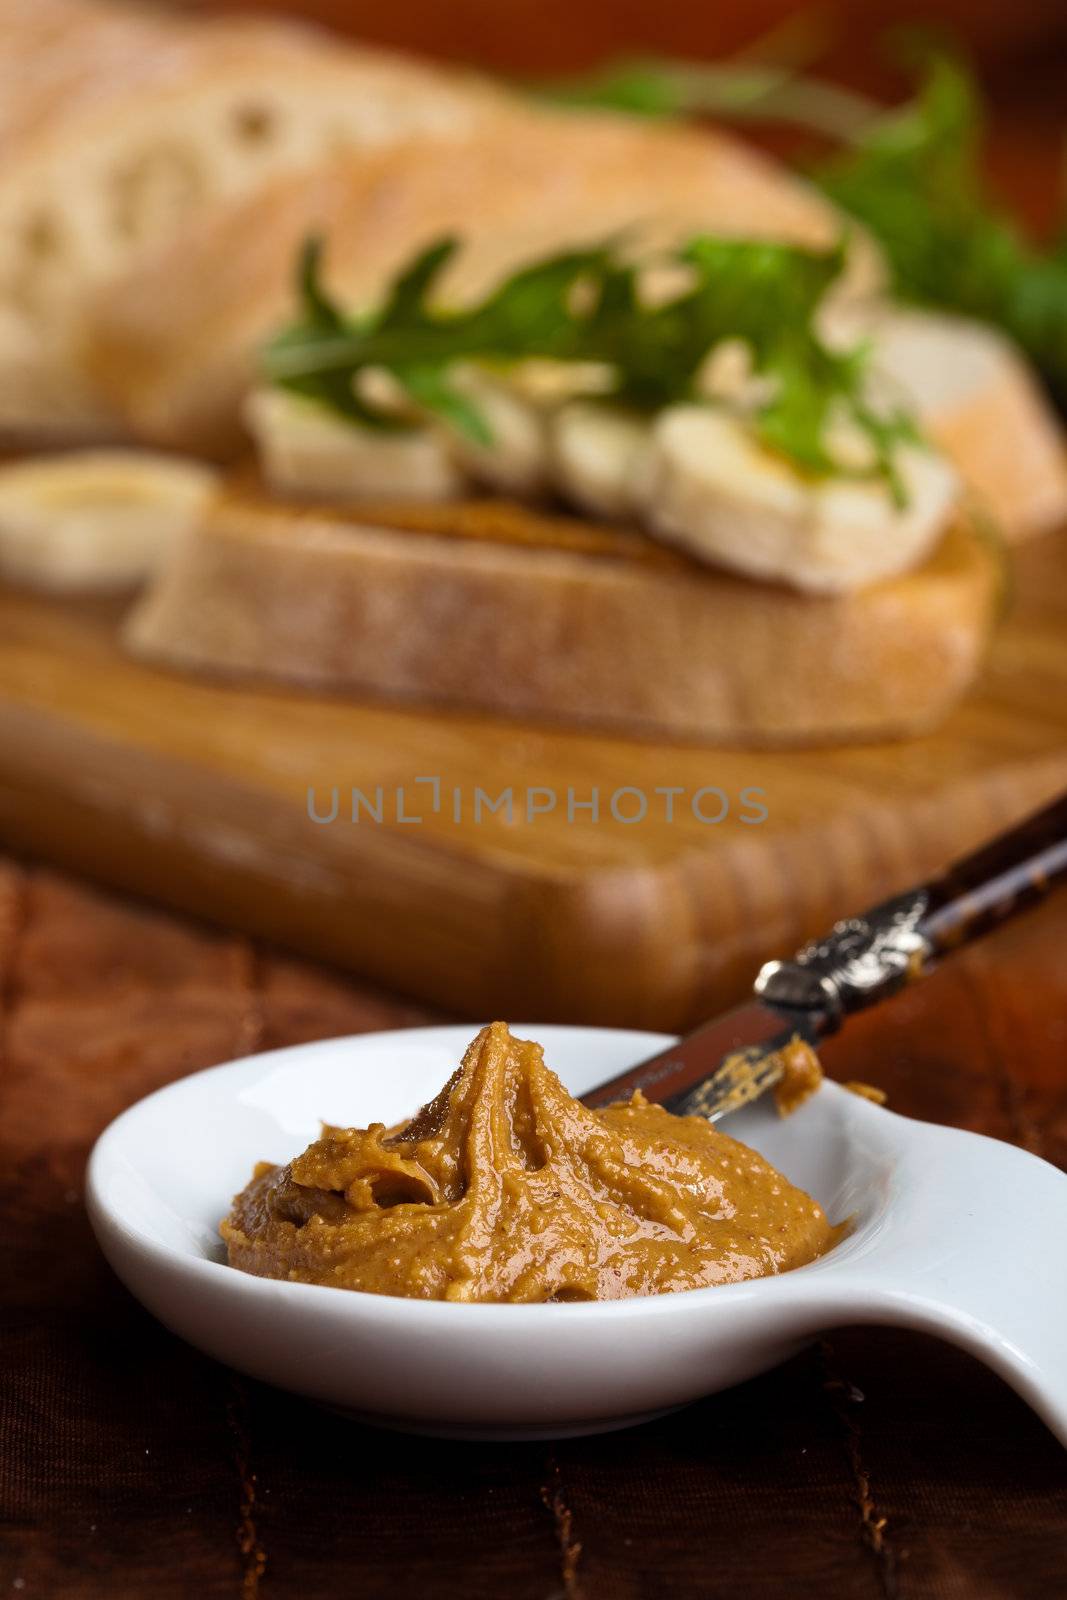 Creamy peanut butter by Fotosmurf